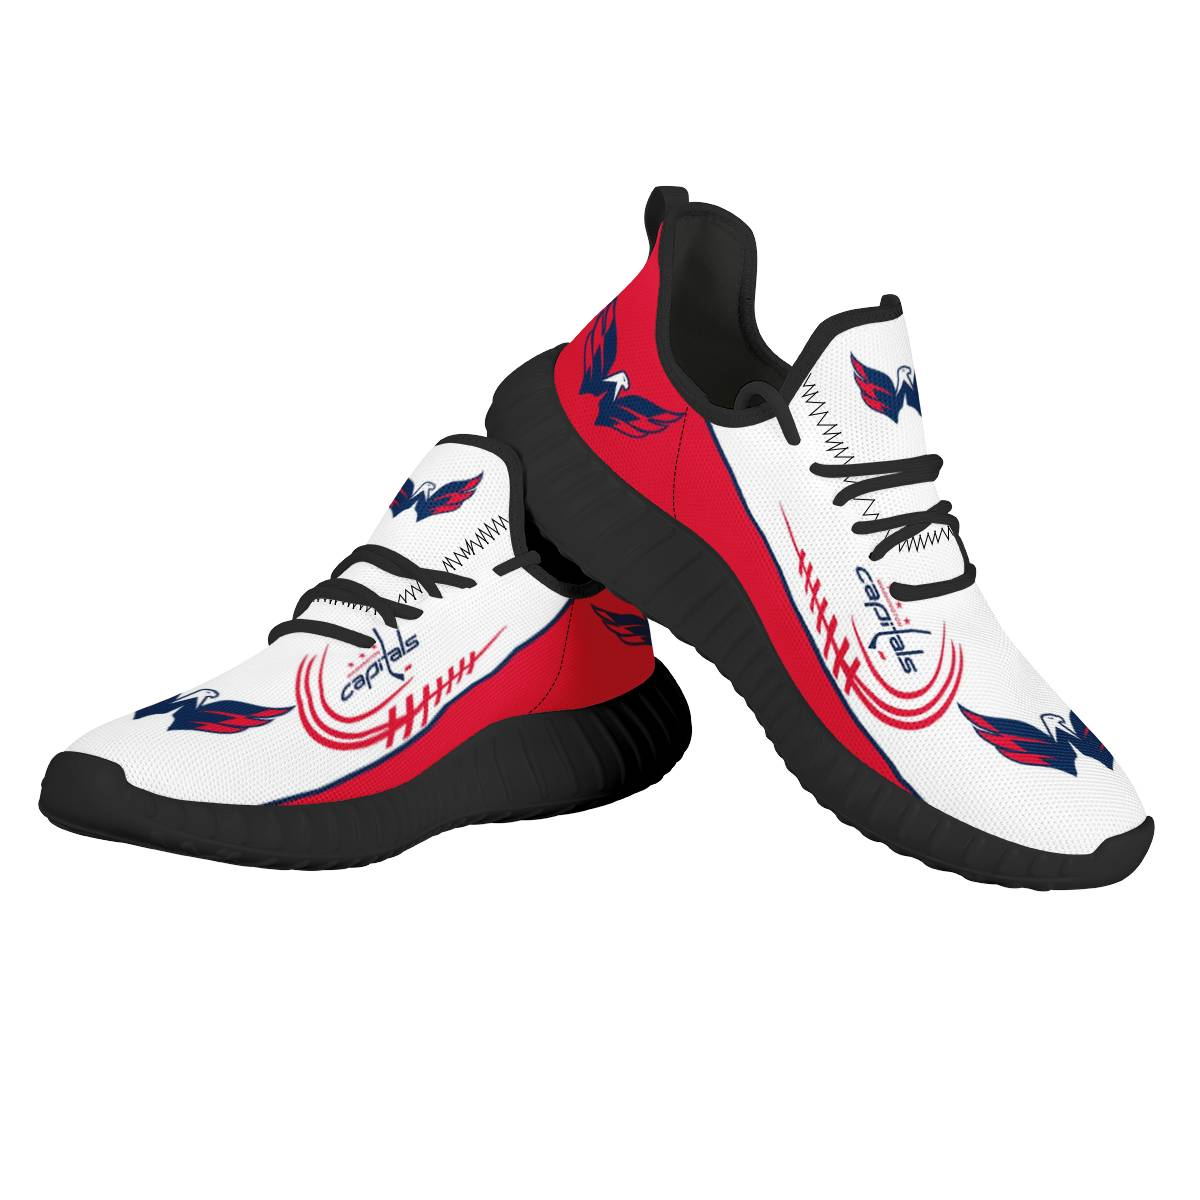 Men's NHL Washington Capitals Mesh Knit Sneakers/Shoes 001